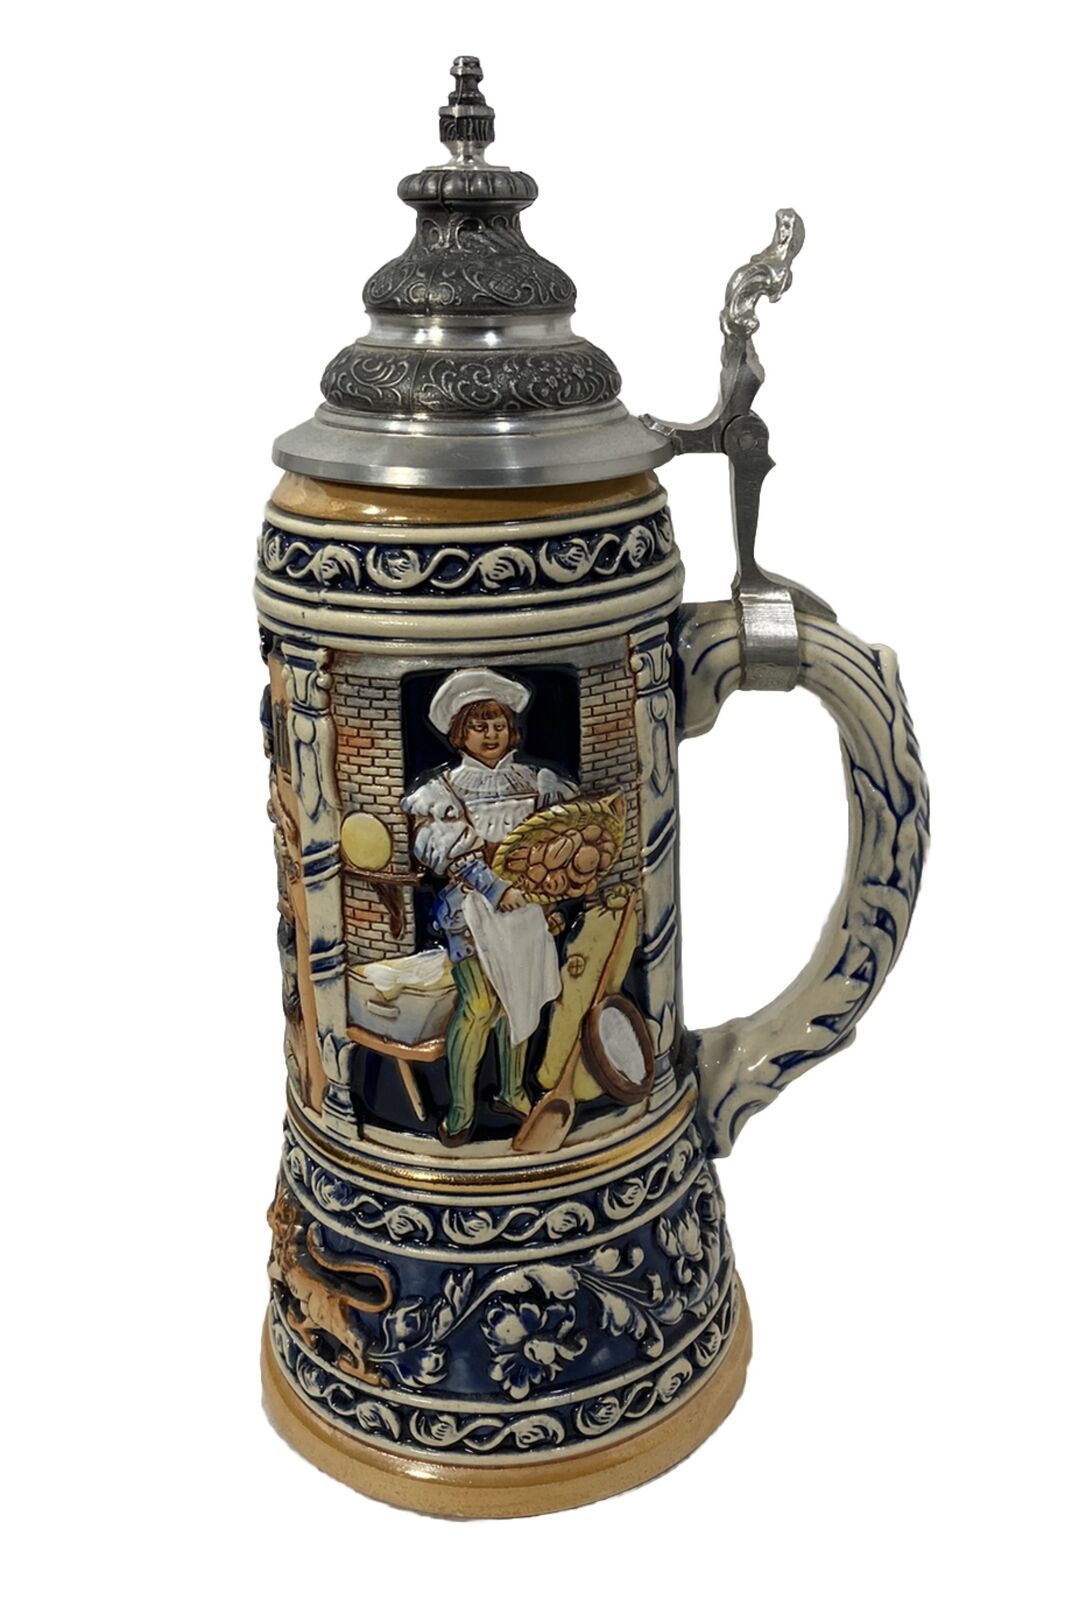 KING Germany Limitaet 2002 12” Medieval Professions Lidded Beer Stein-#378/2500